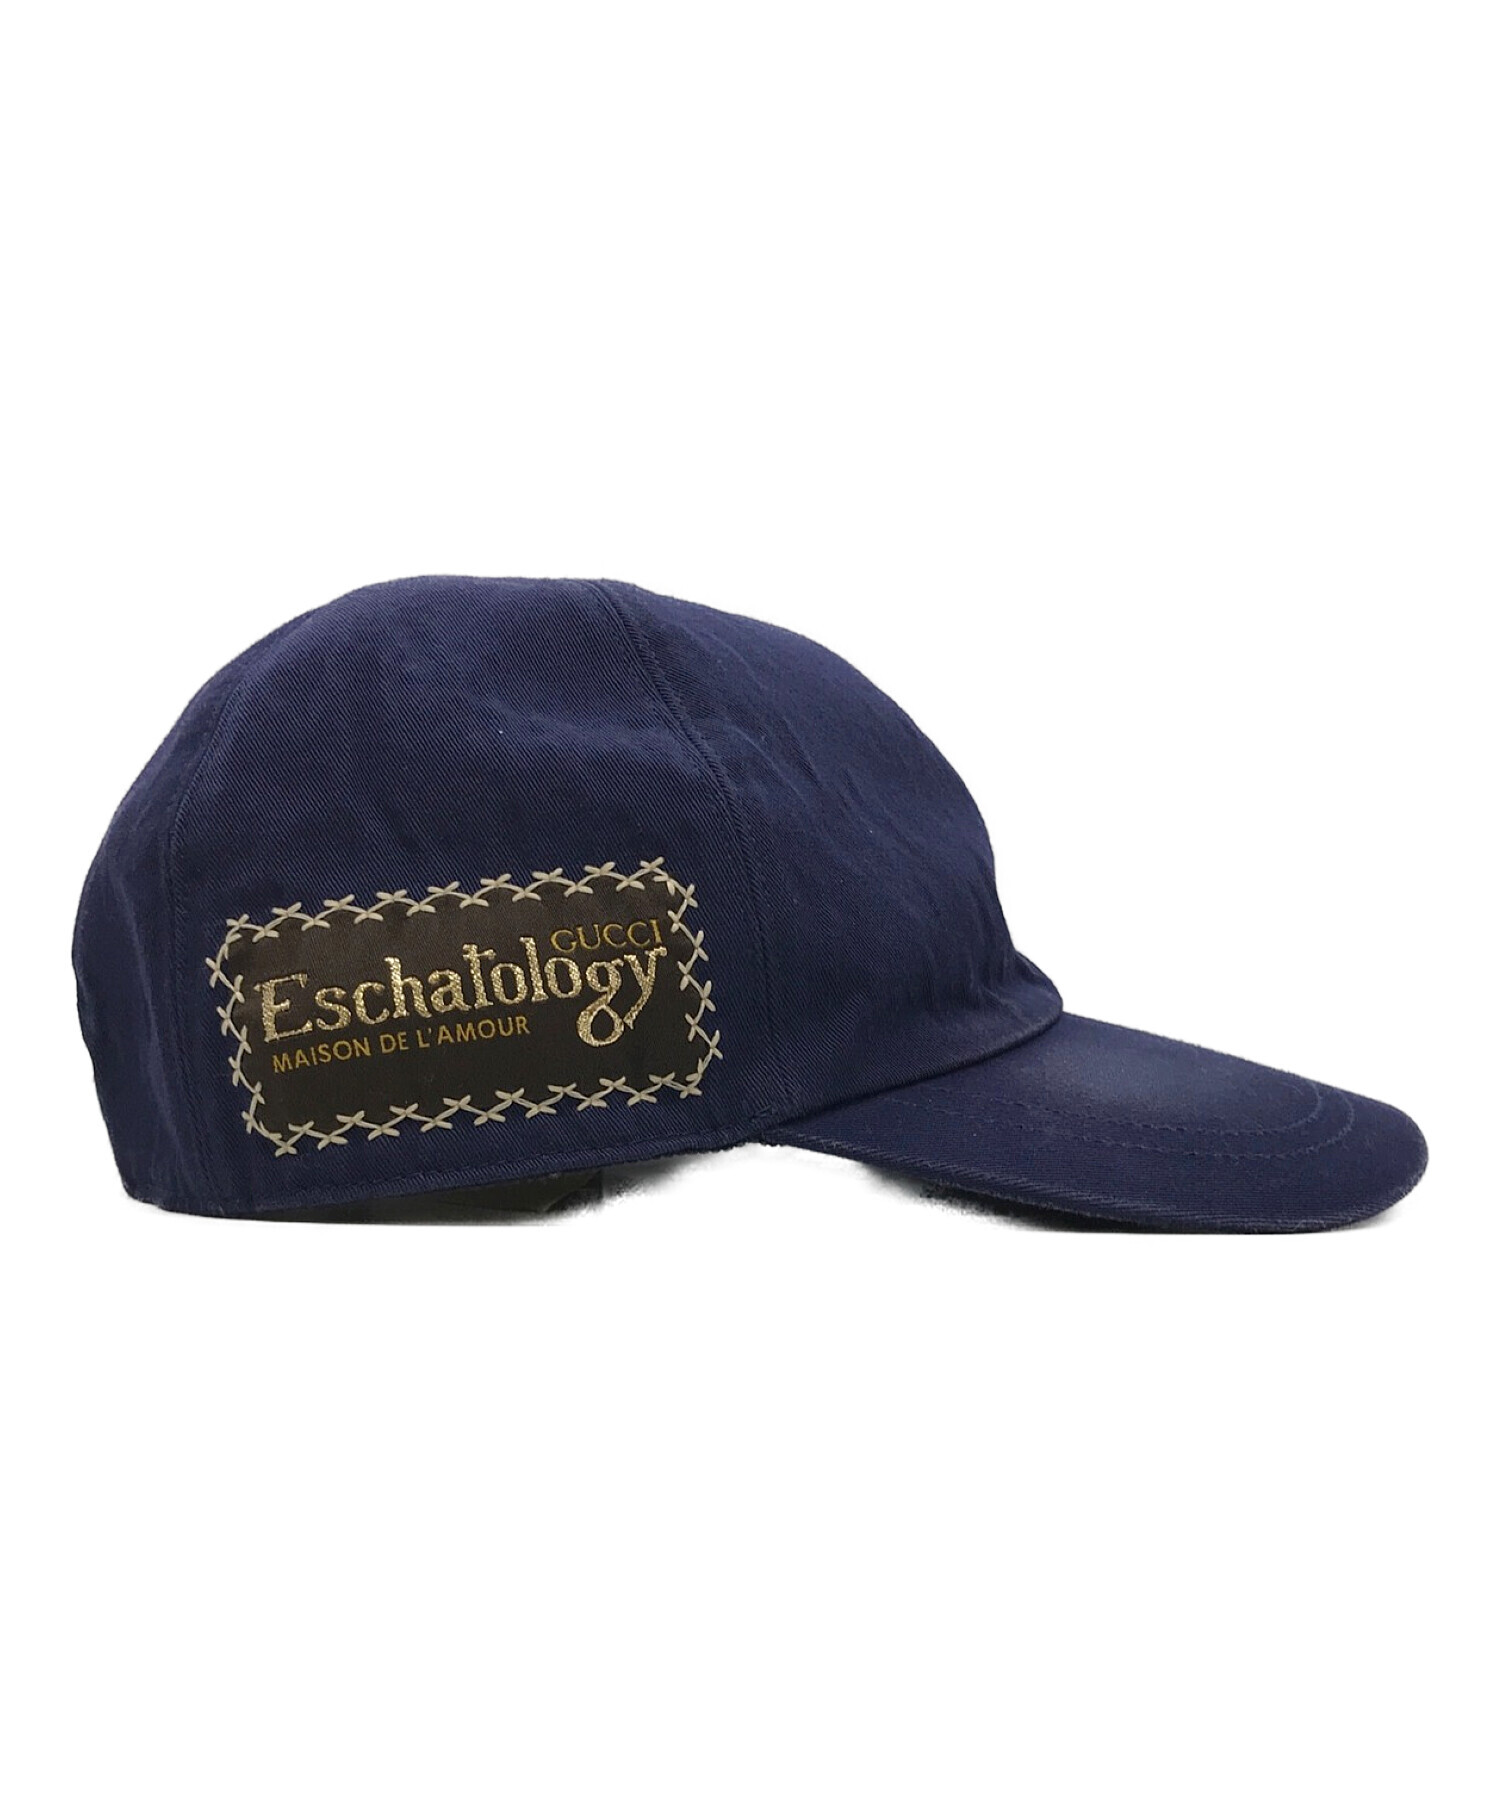 GUCCI (グッチ) Baseball Hat with Gucci Eschatology label ネイビー サイズ:M